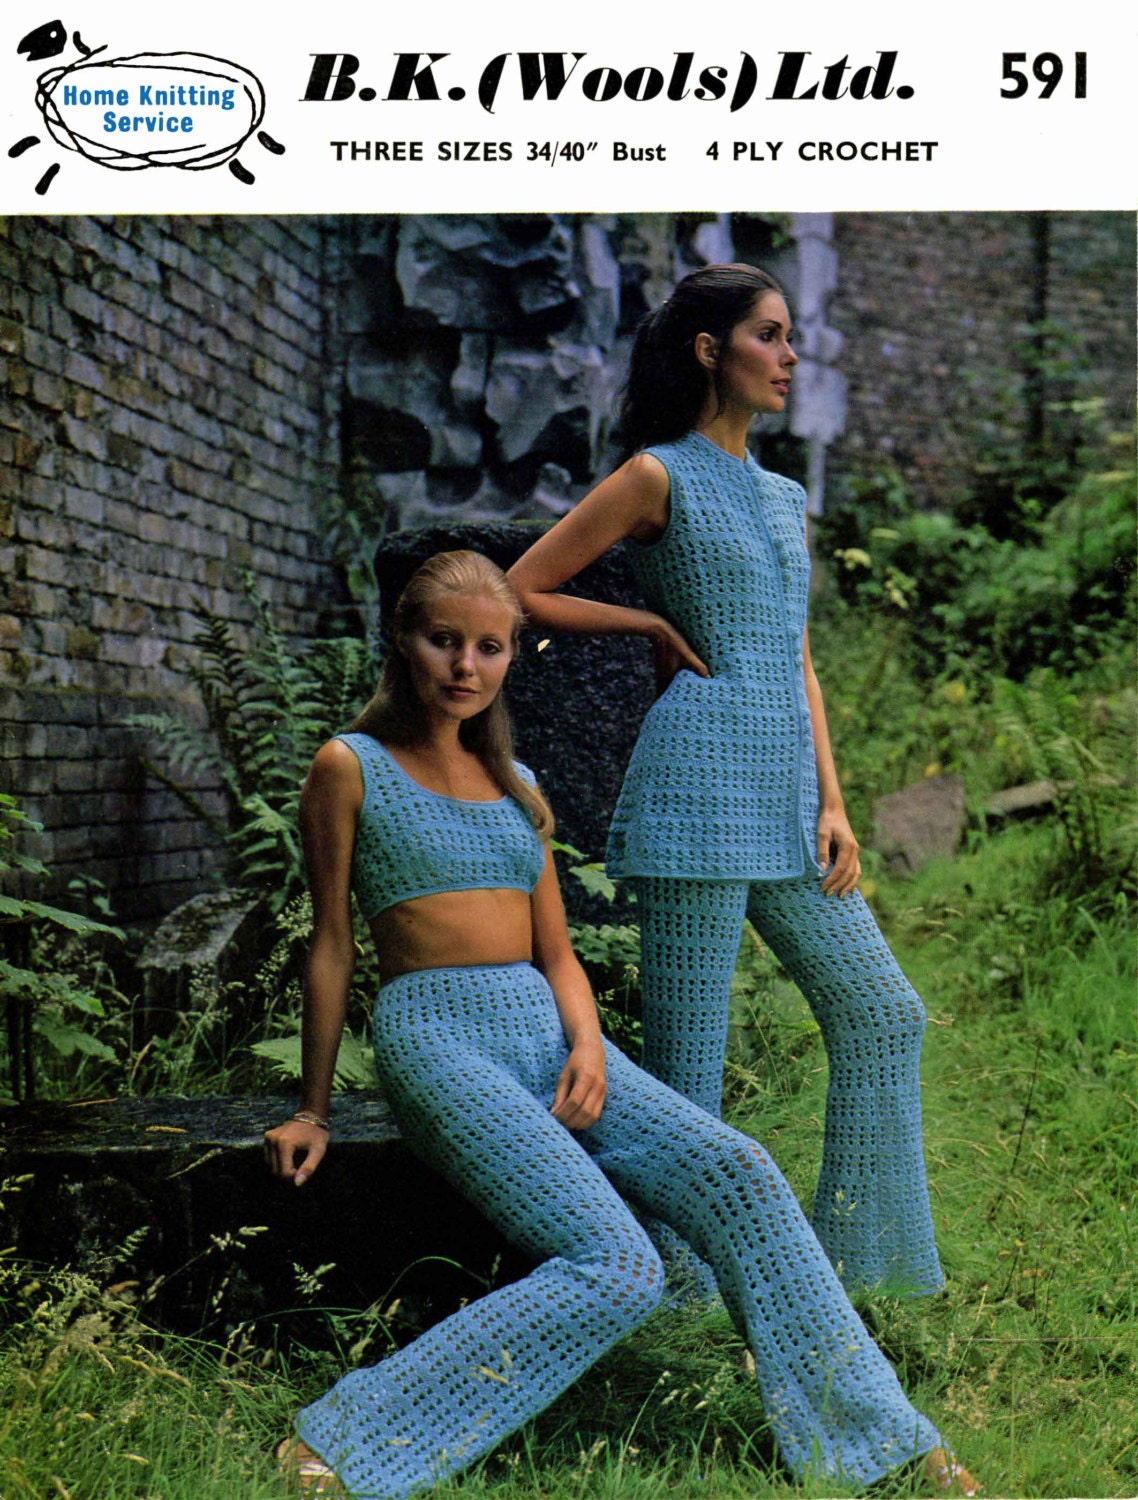 Ladies Trouser Suit, 34"/40", 4ply, 60s Crochet Pattern, B.K.Wools 591